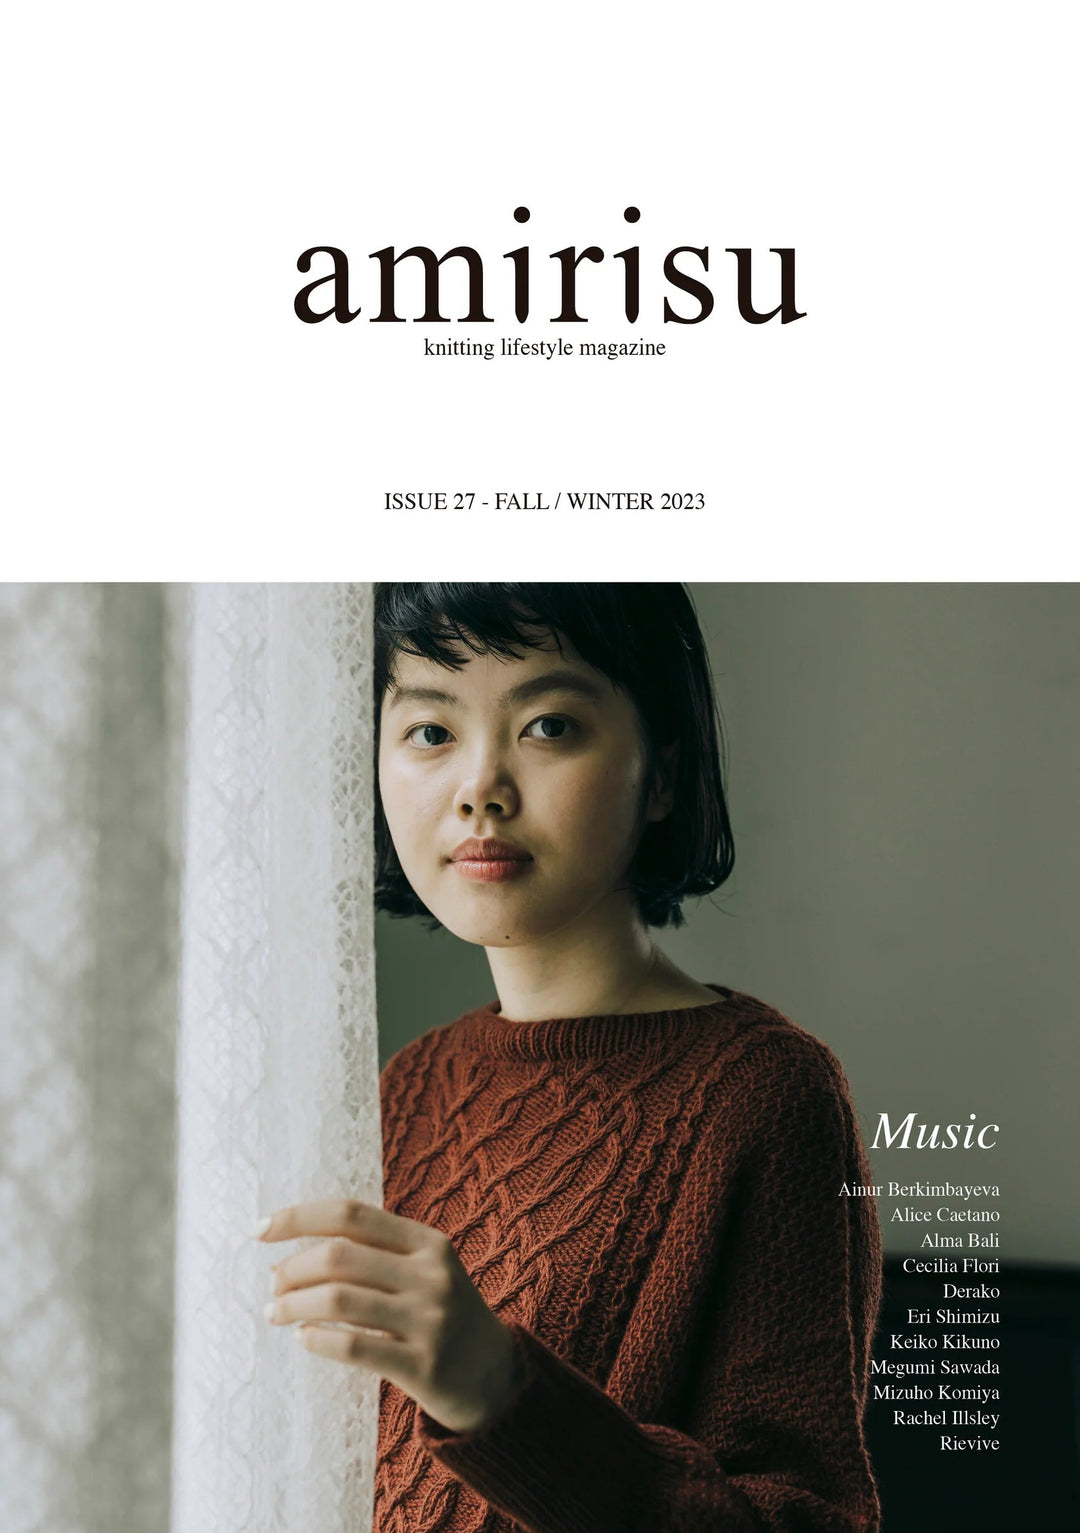 AMIRISU Issue 27 Autumn/Winter 2023 - BOOKS - Wild Atlantic Yarns